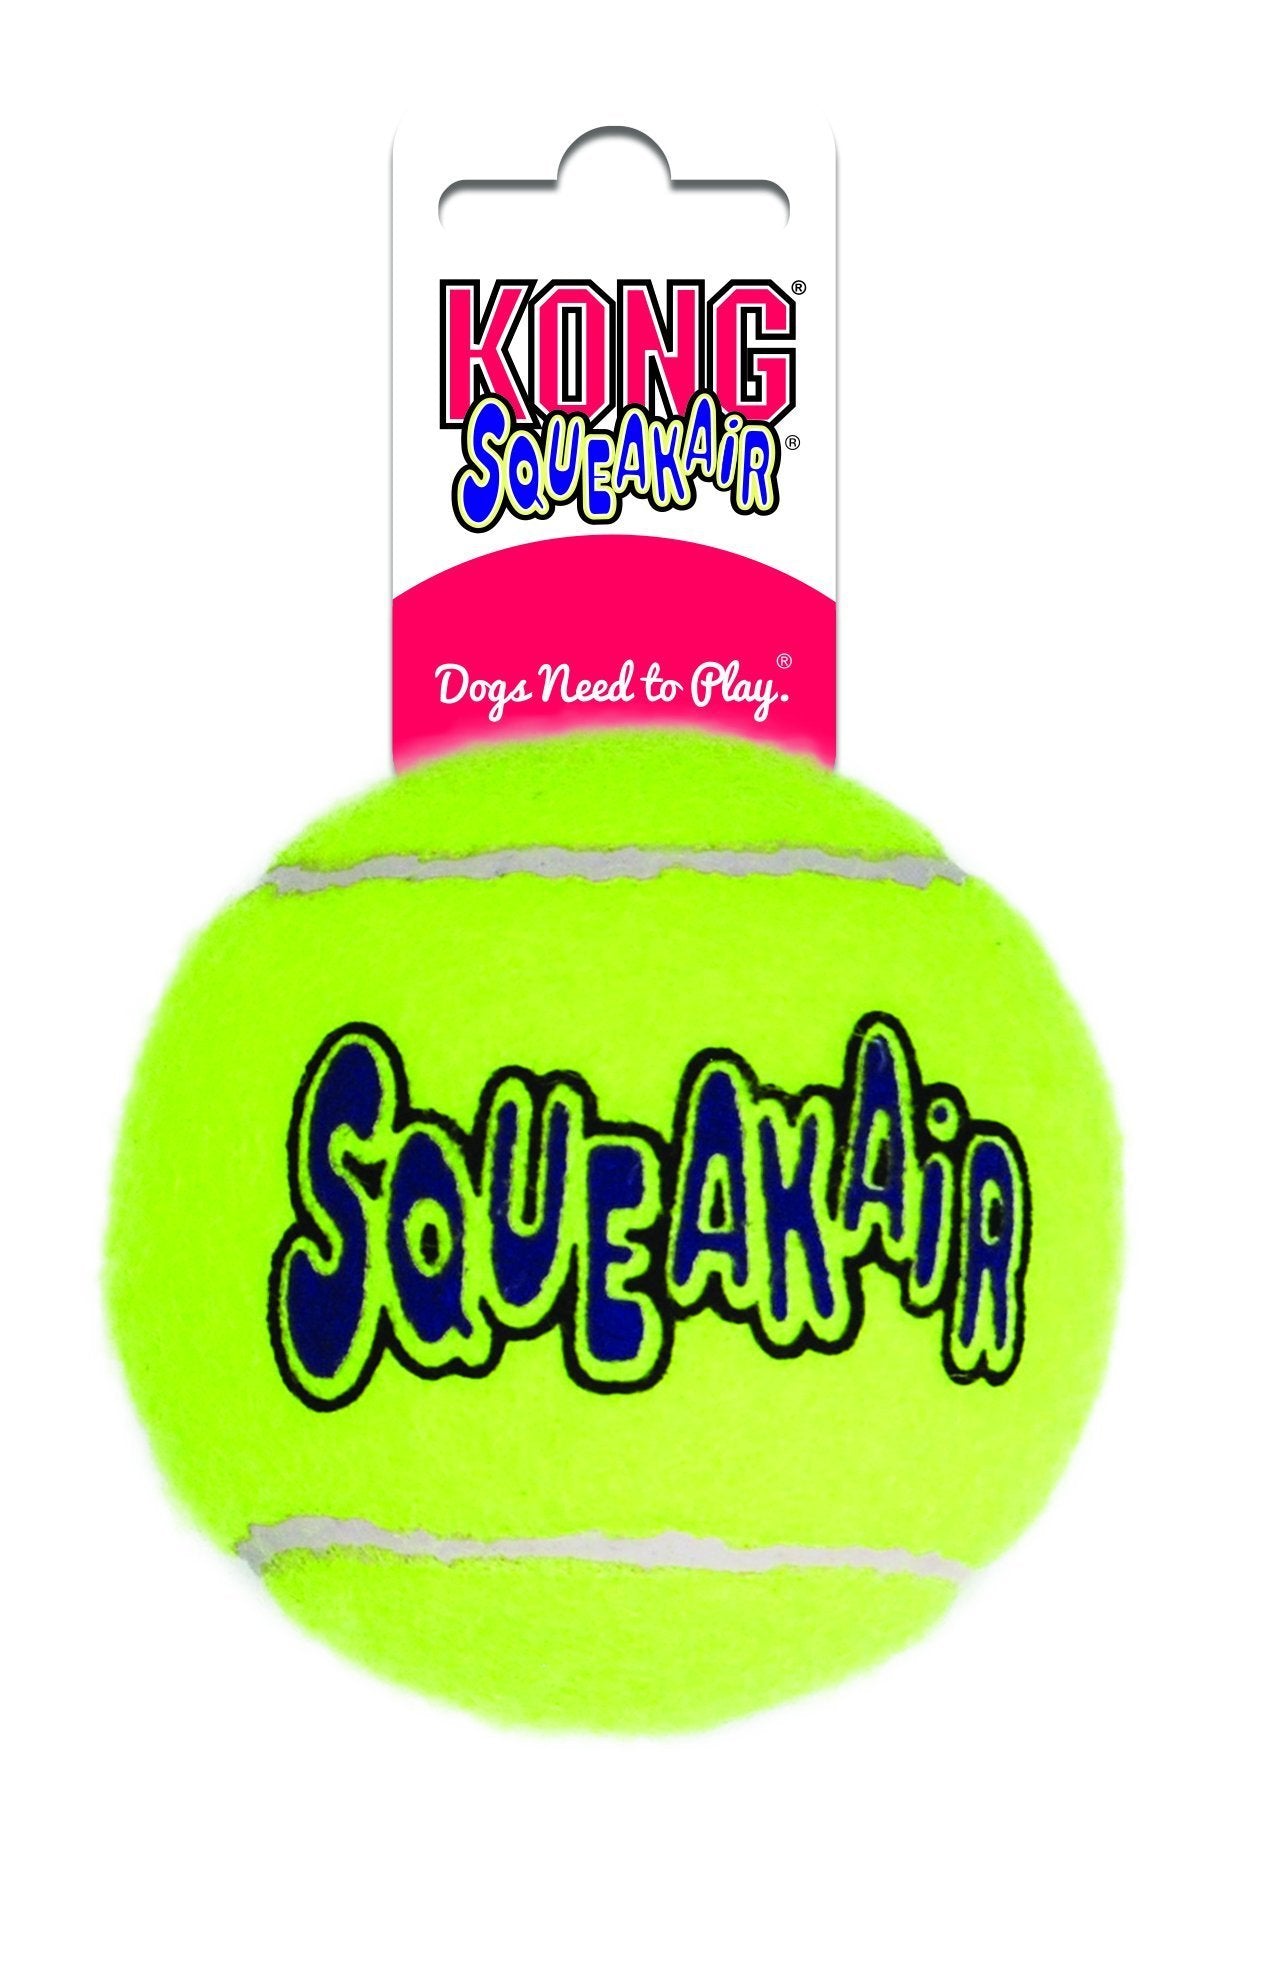 Kong AIRDOG Yellow SQUEAKAIR Tennis Ball - Ball